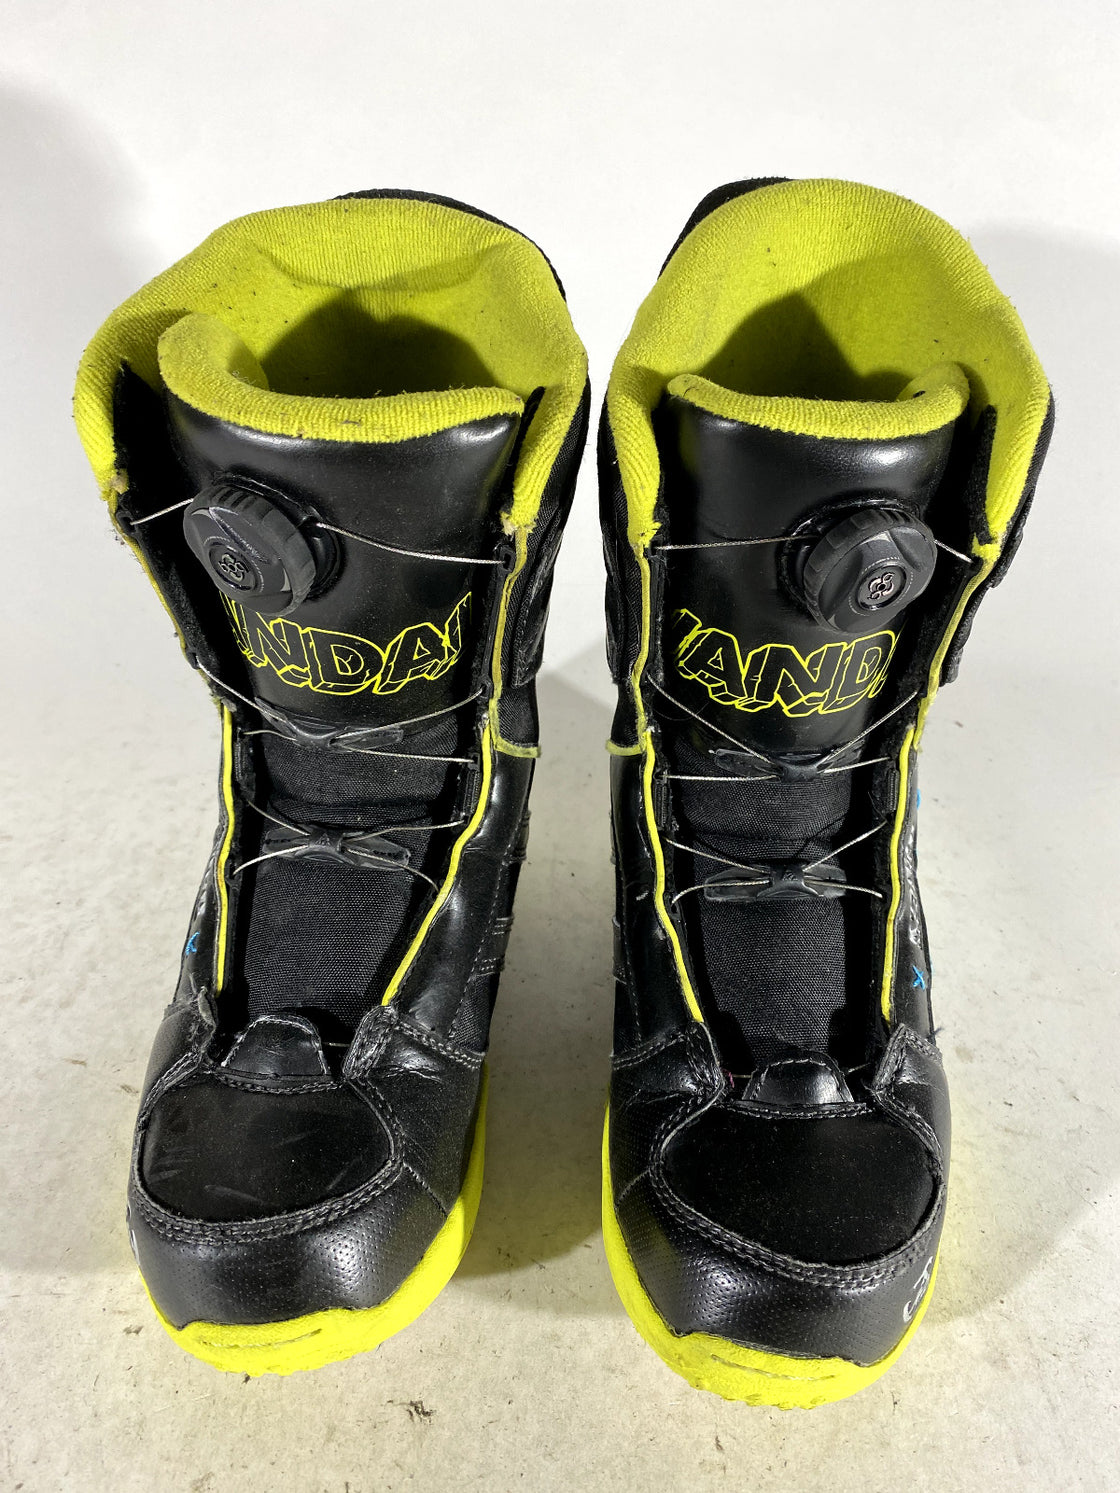 K2 Vandal Snowboard Boots Size EU36.5 US5 UK4 Mondo 235 mm